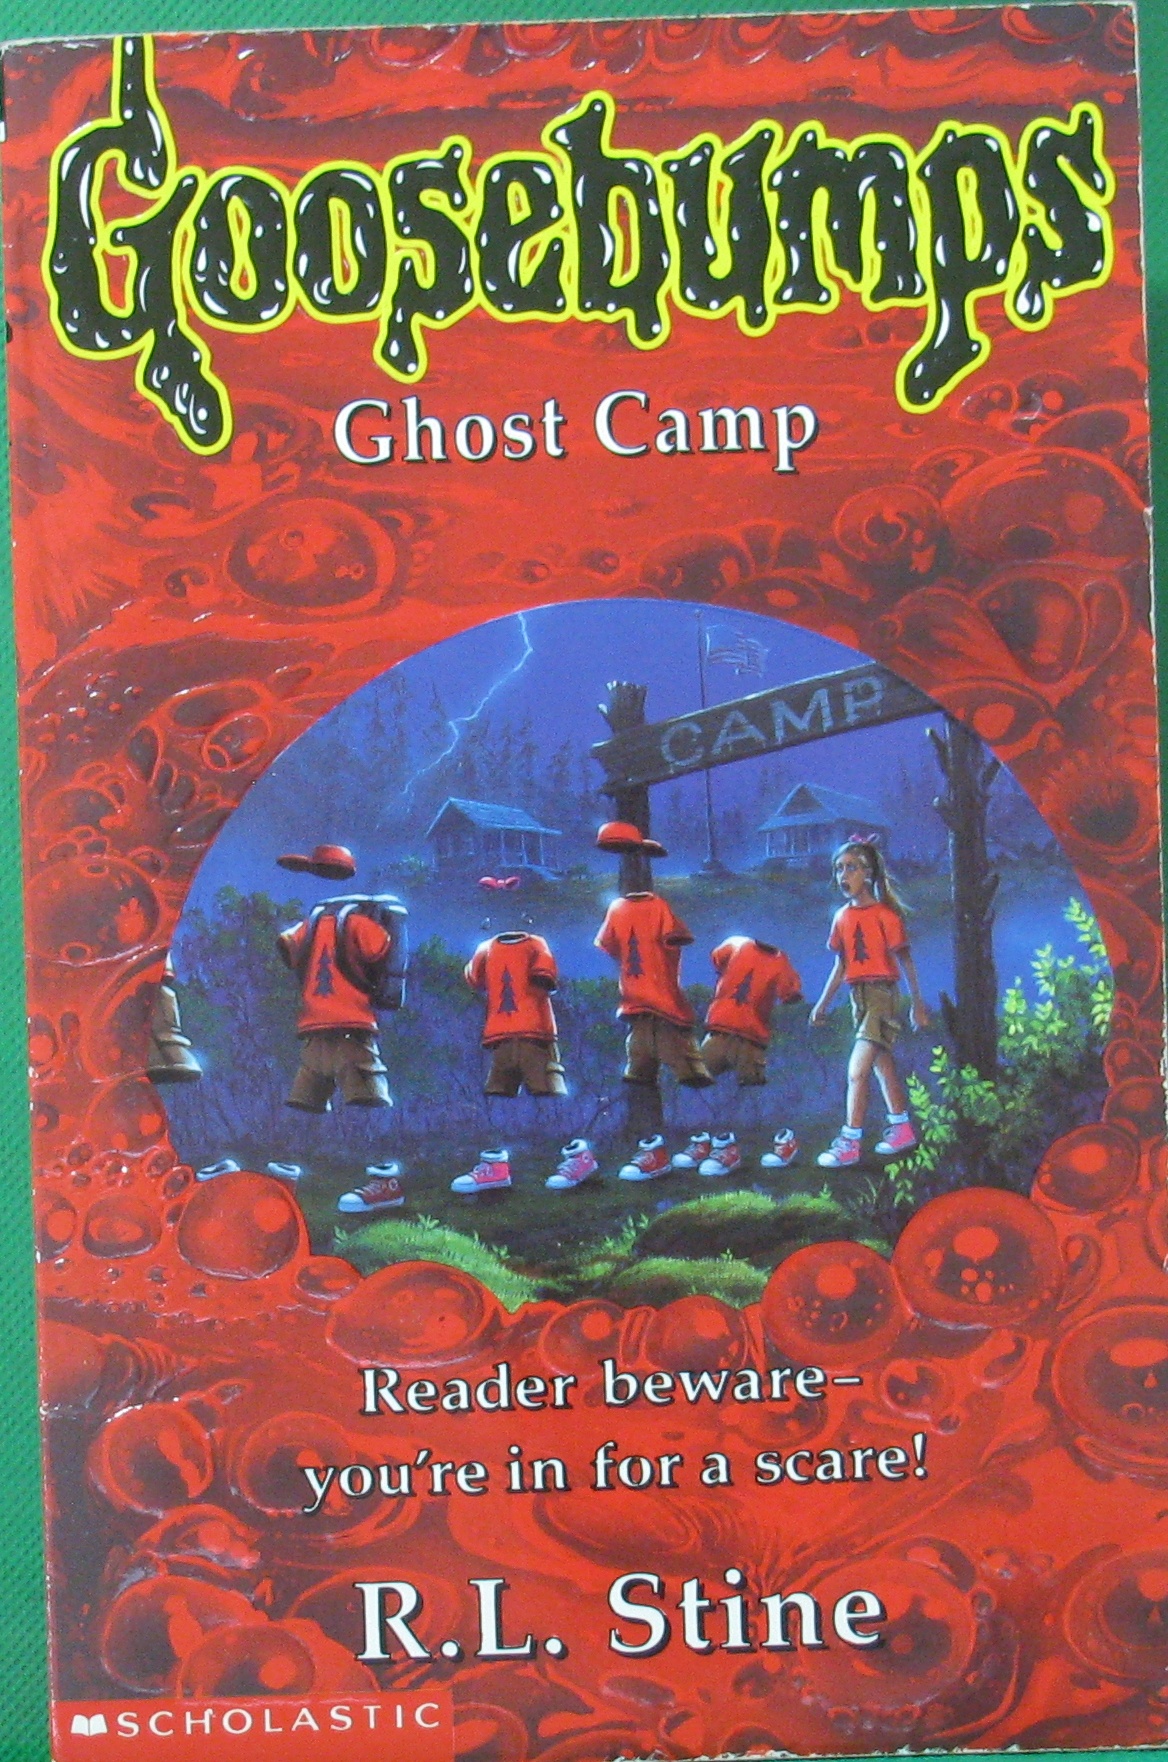 Ghost Camp by R.L. Stine